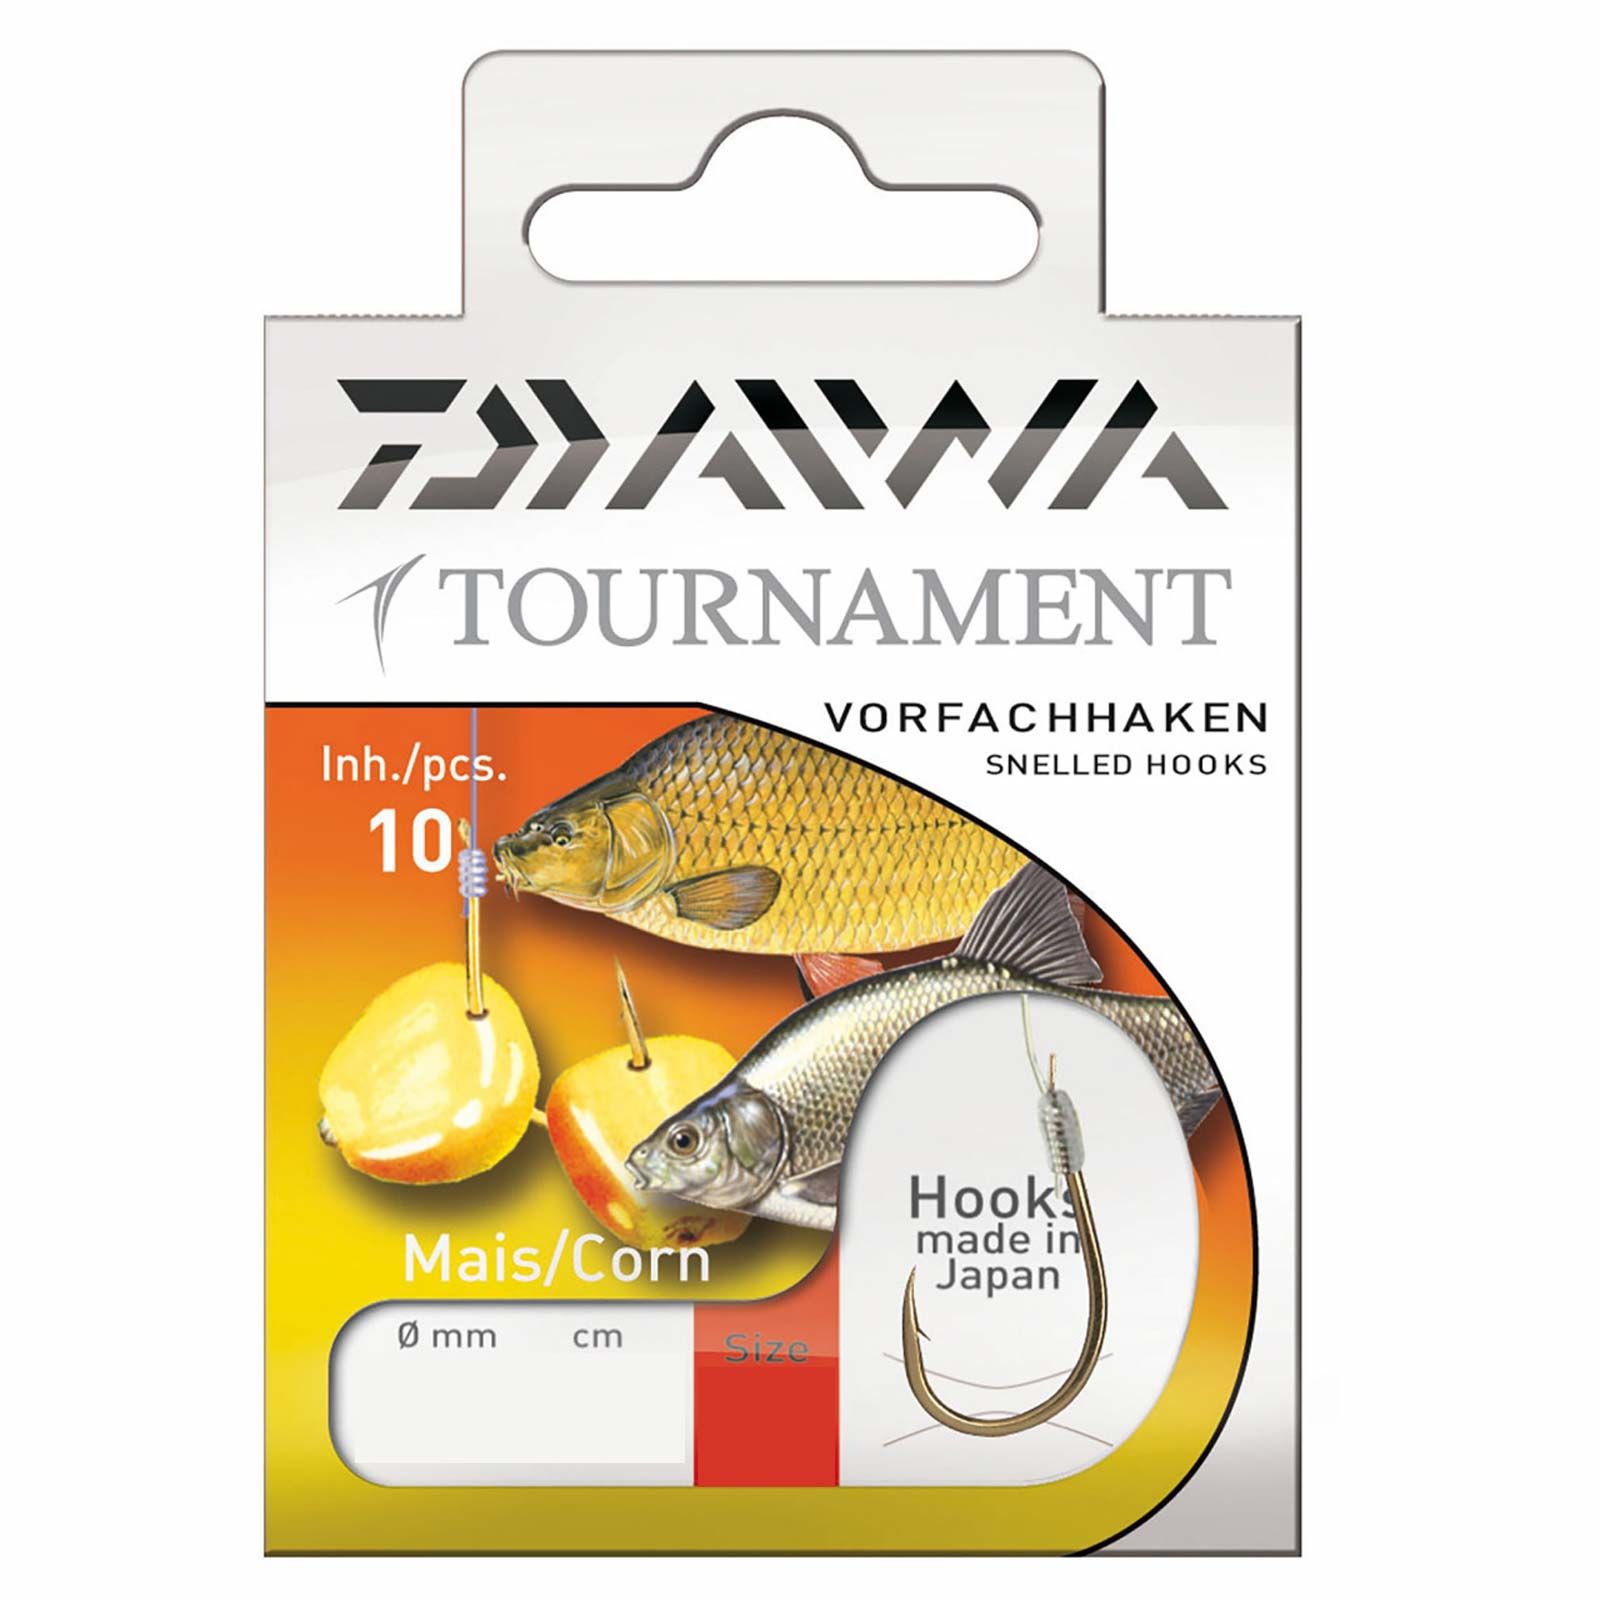 Daiwa Tournament Maishaken Gebundene Vorfachhaken